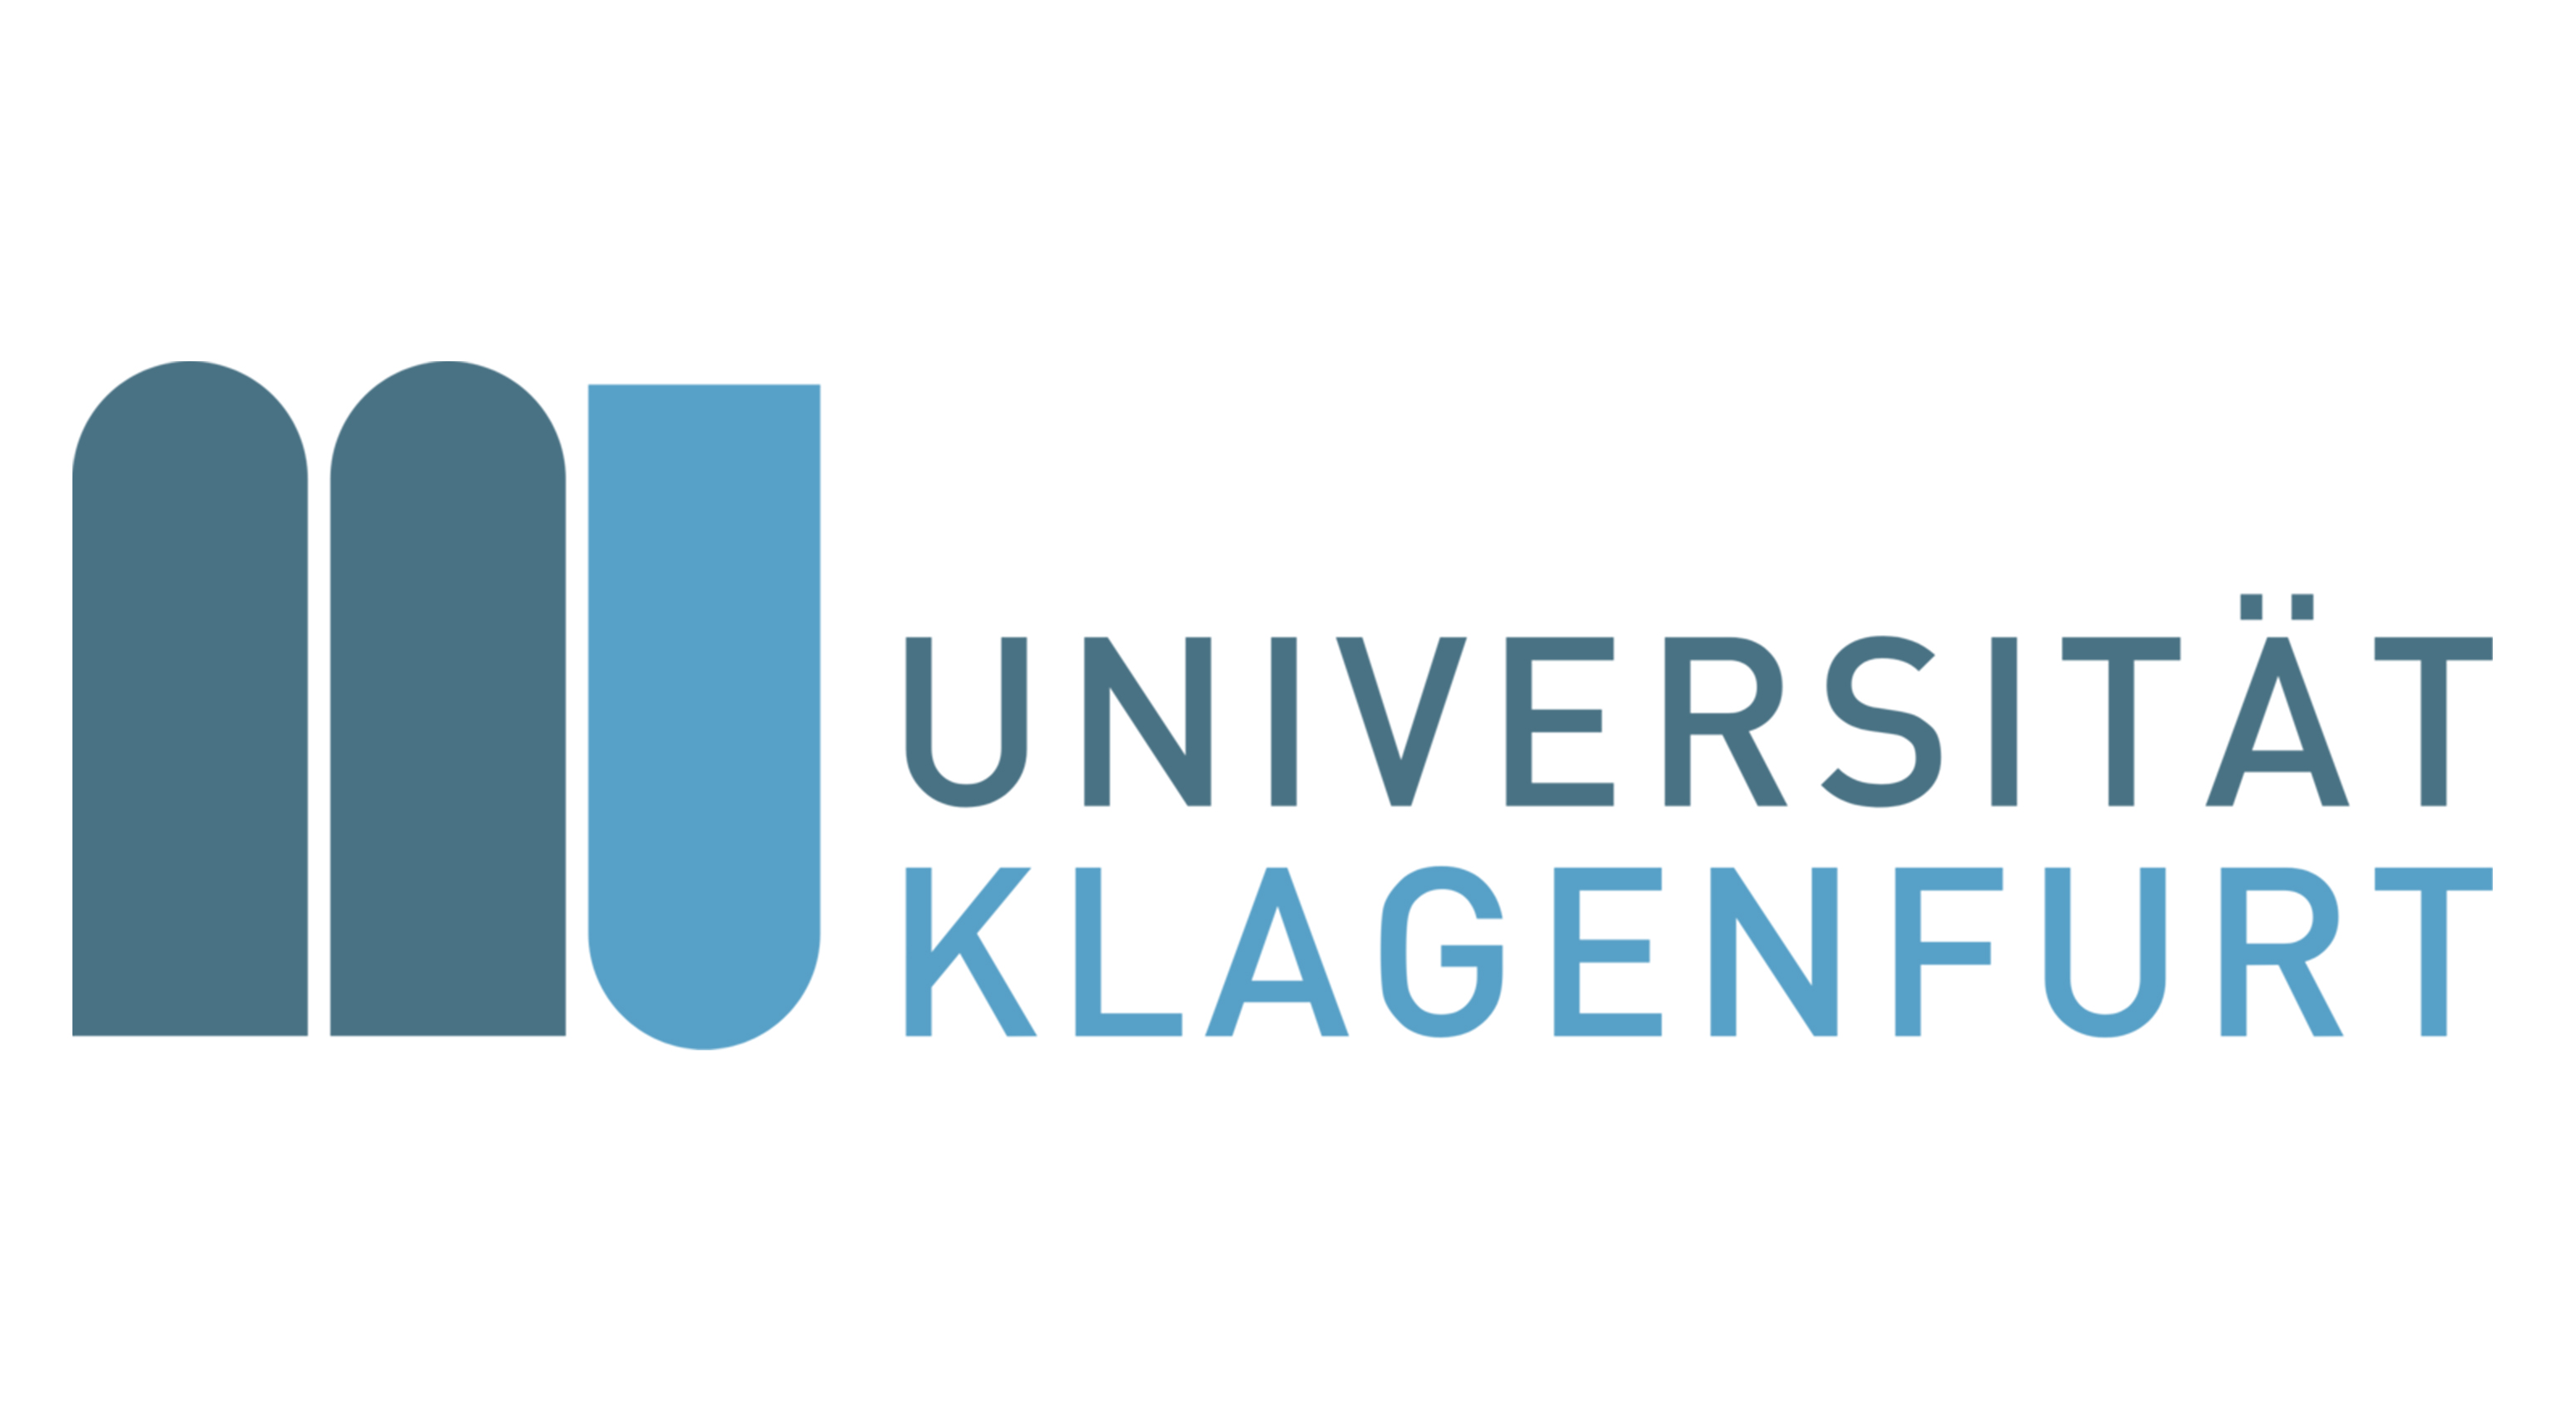 Universitat Klagenfurt